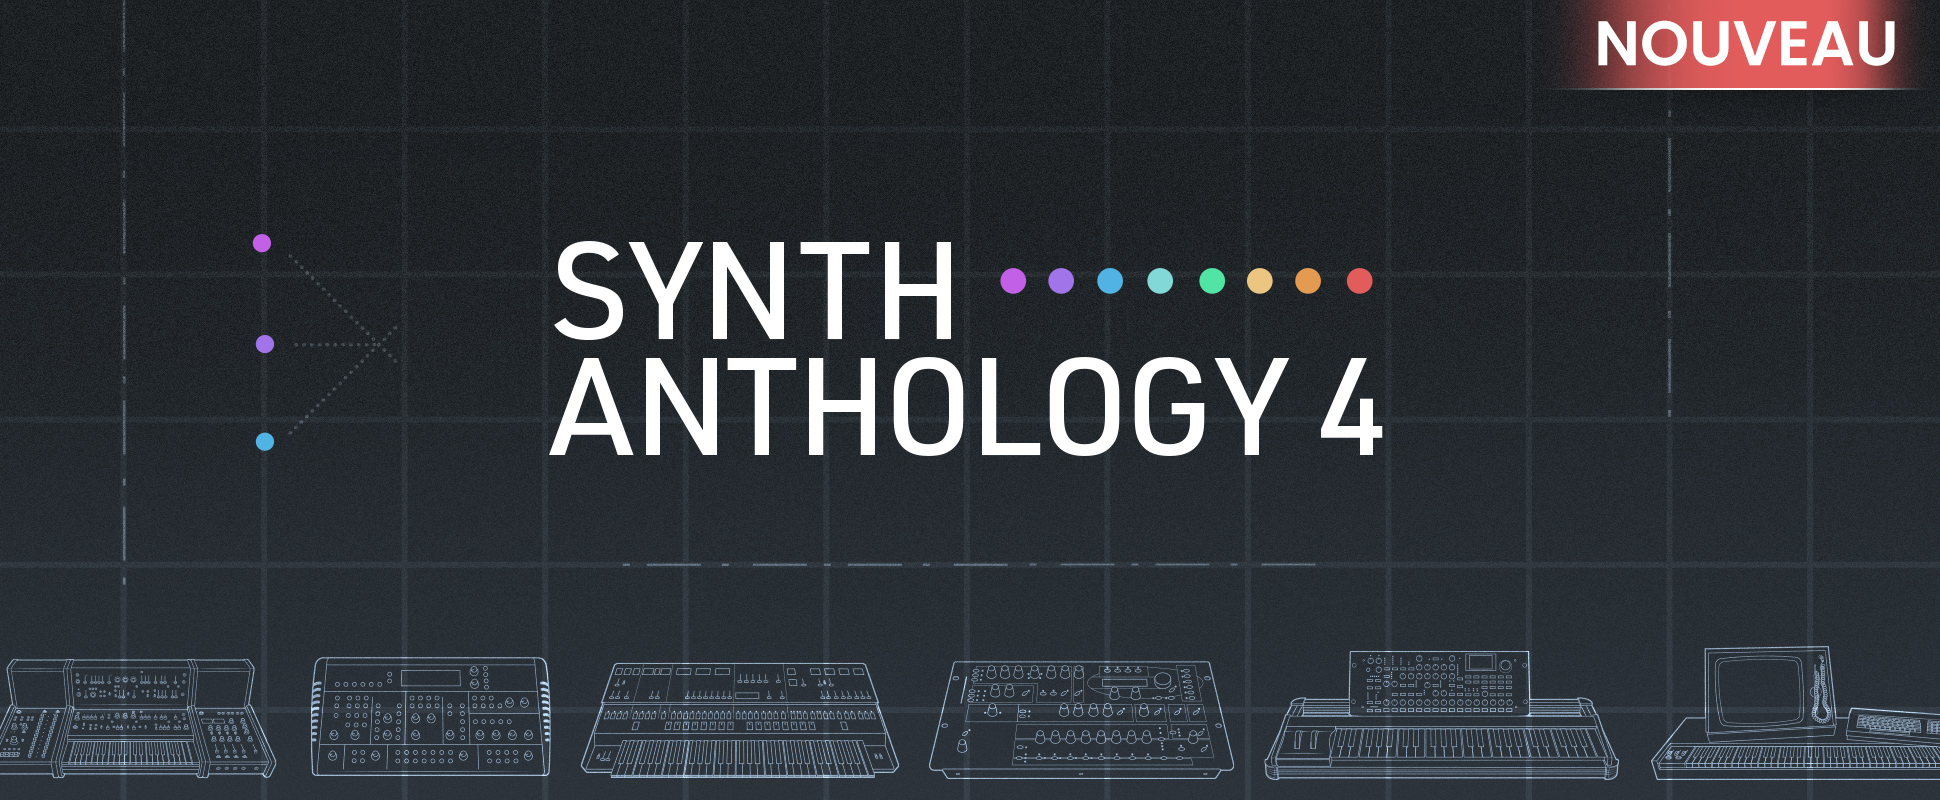 Synth Anthology 4 - New